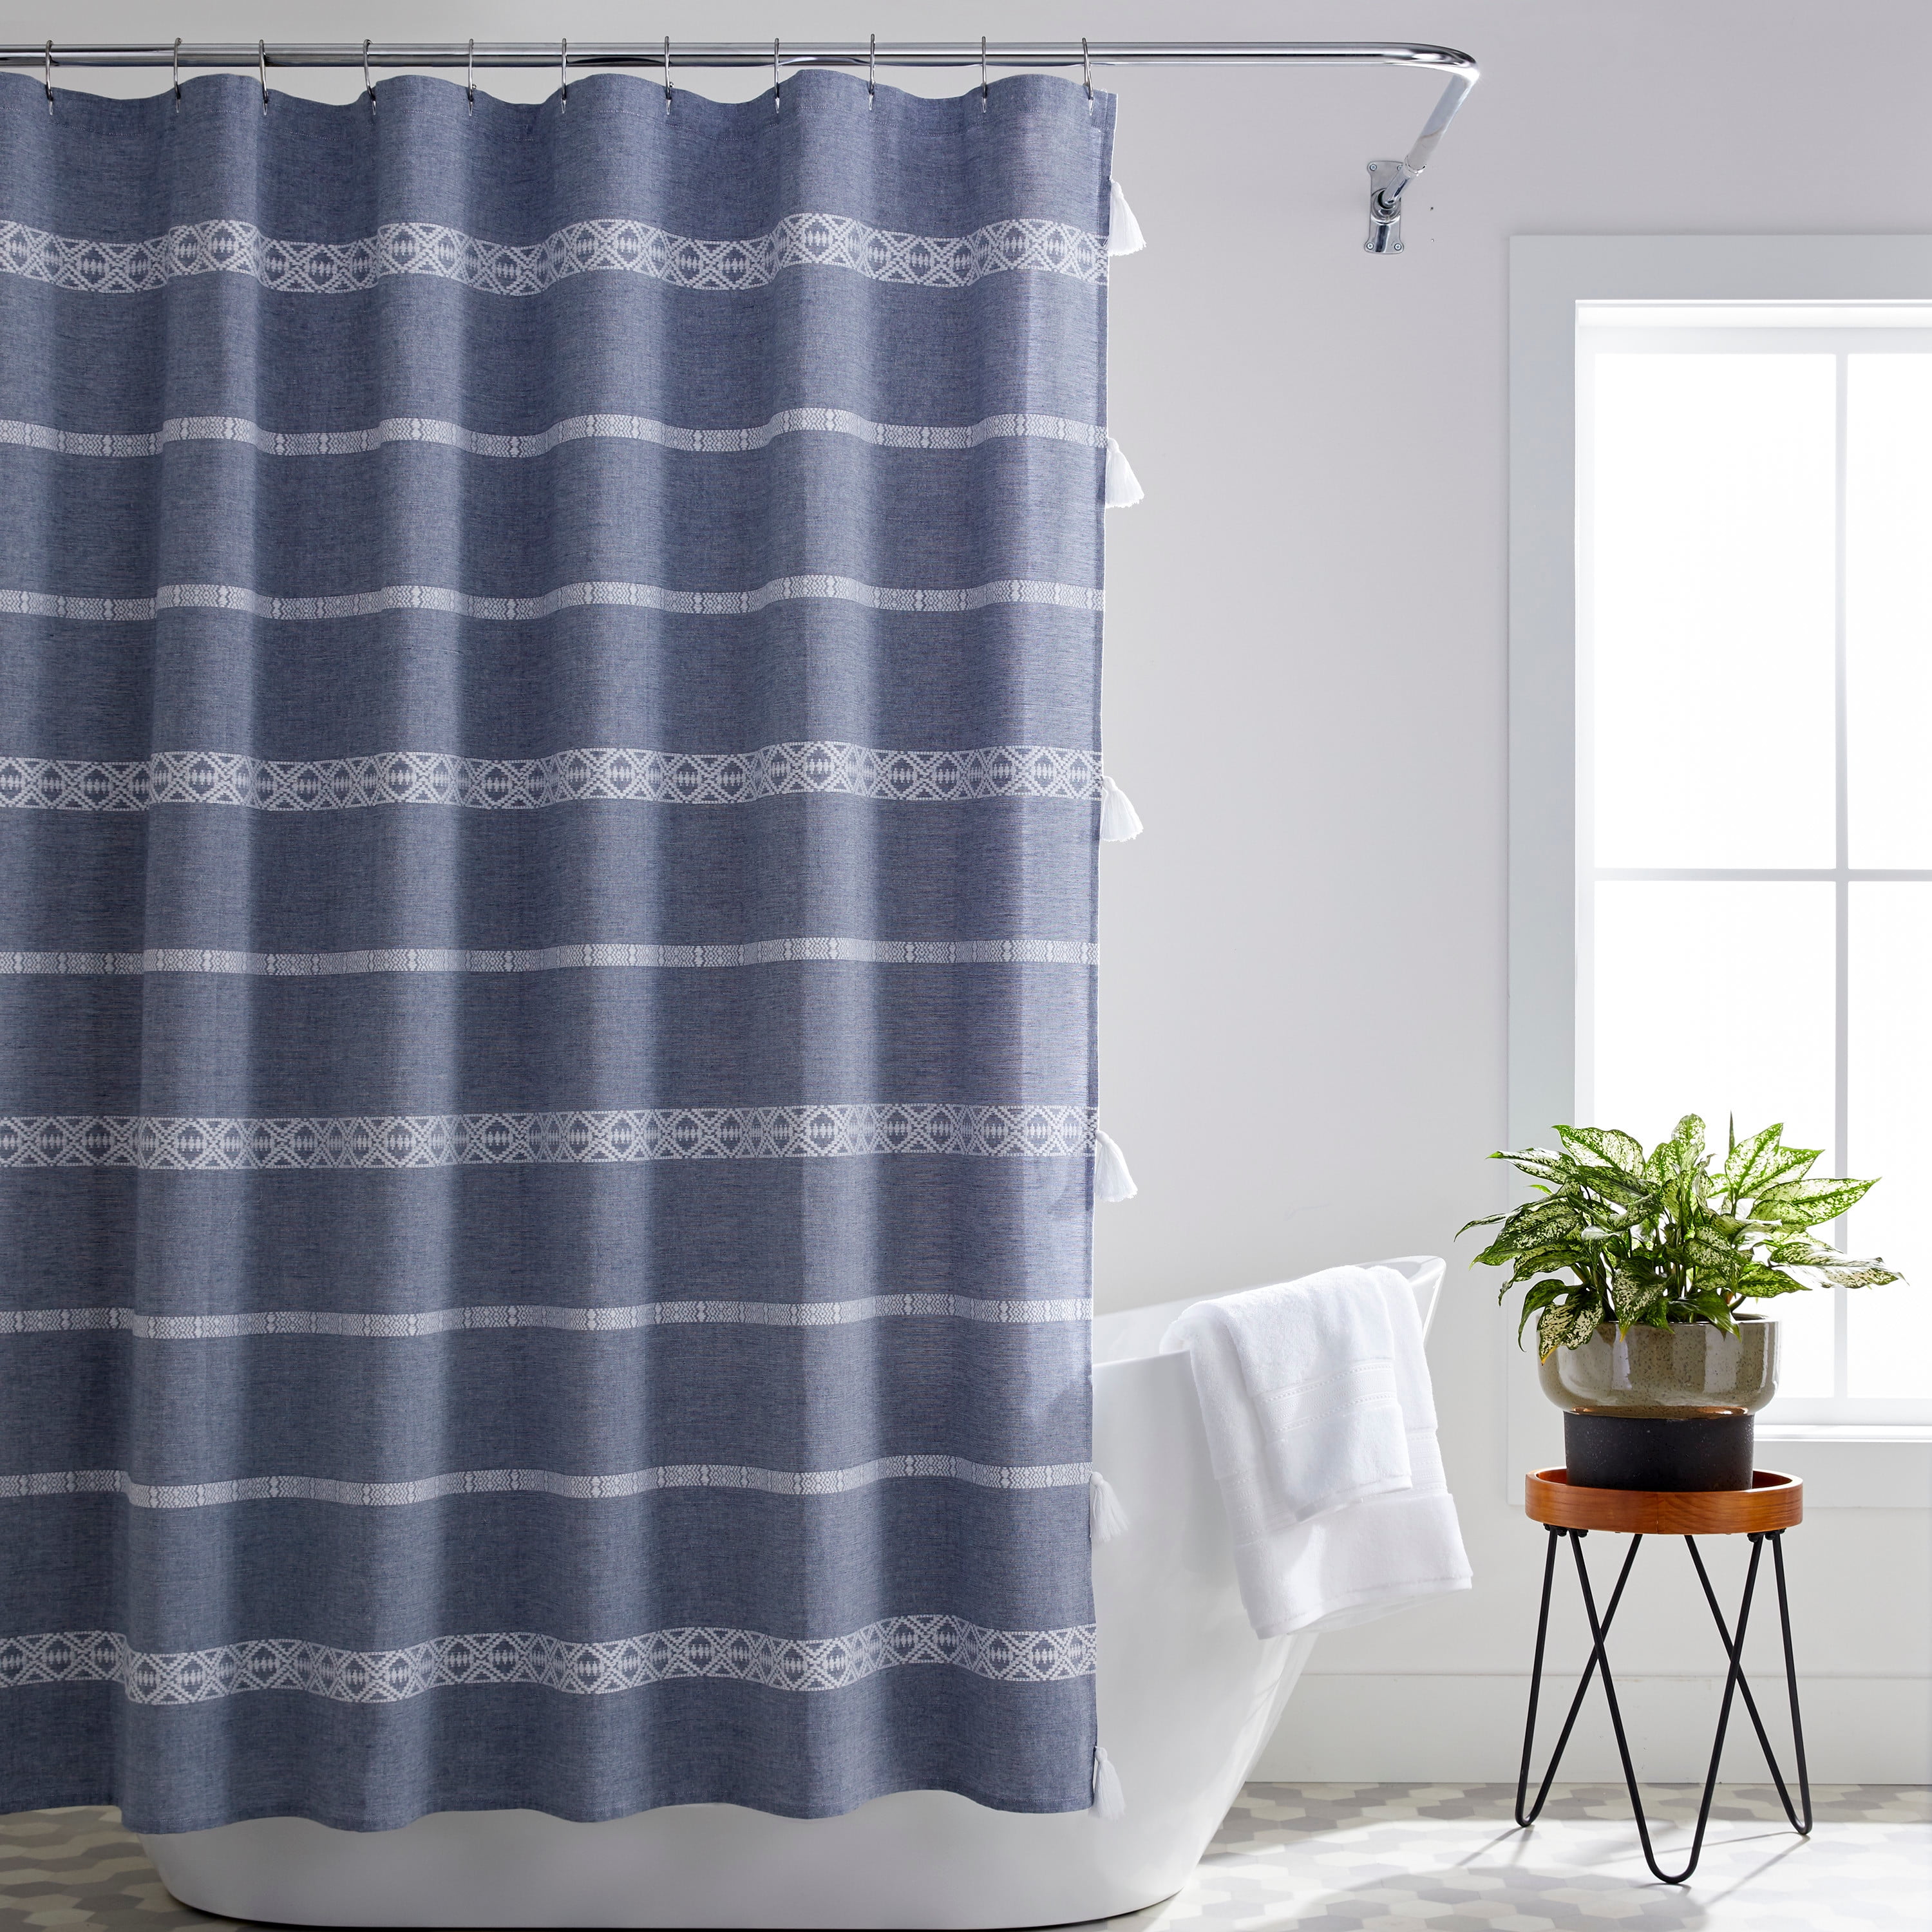 Better Homes Gardens Boho Chic, Blue Bathroom Shower Curtains